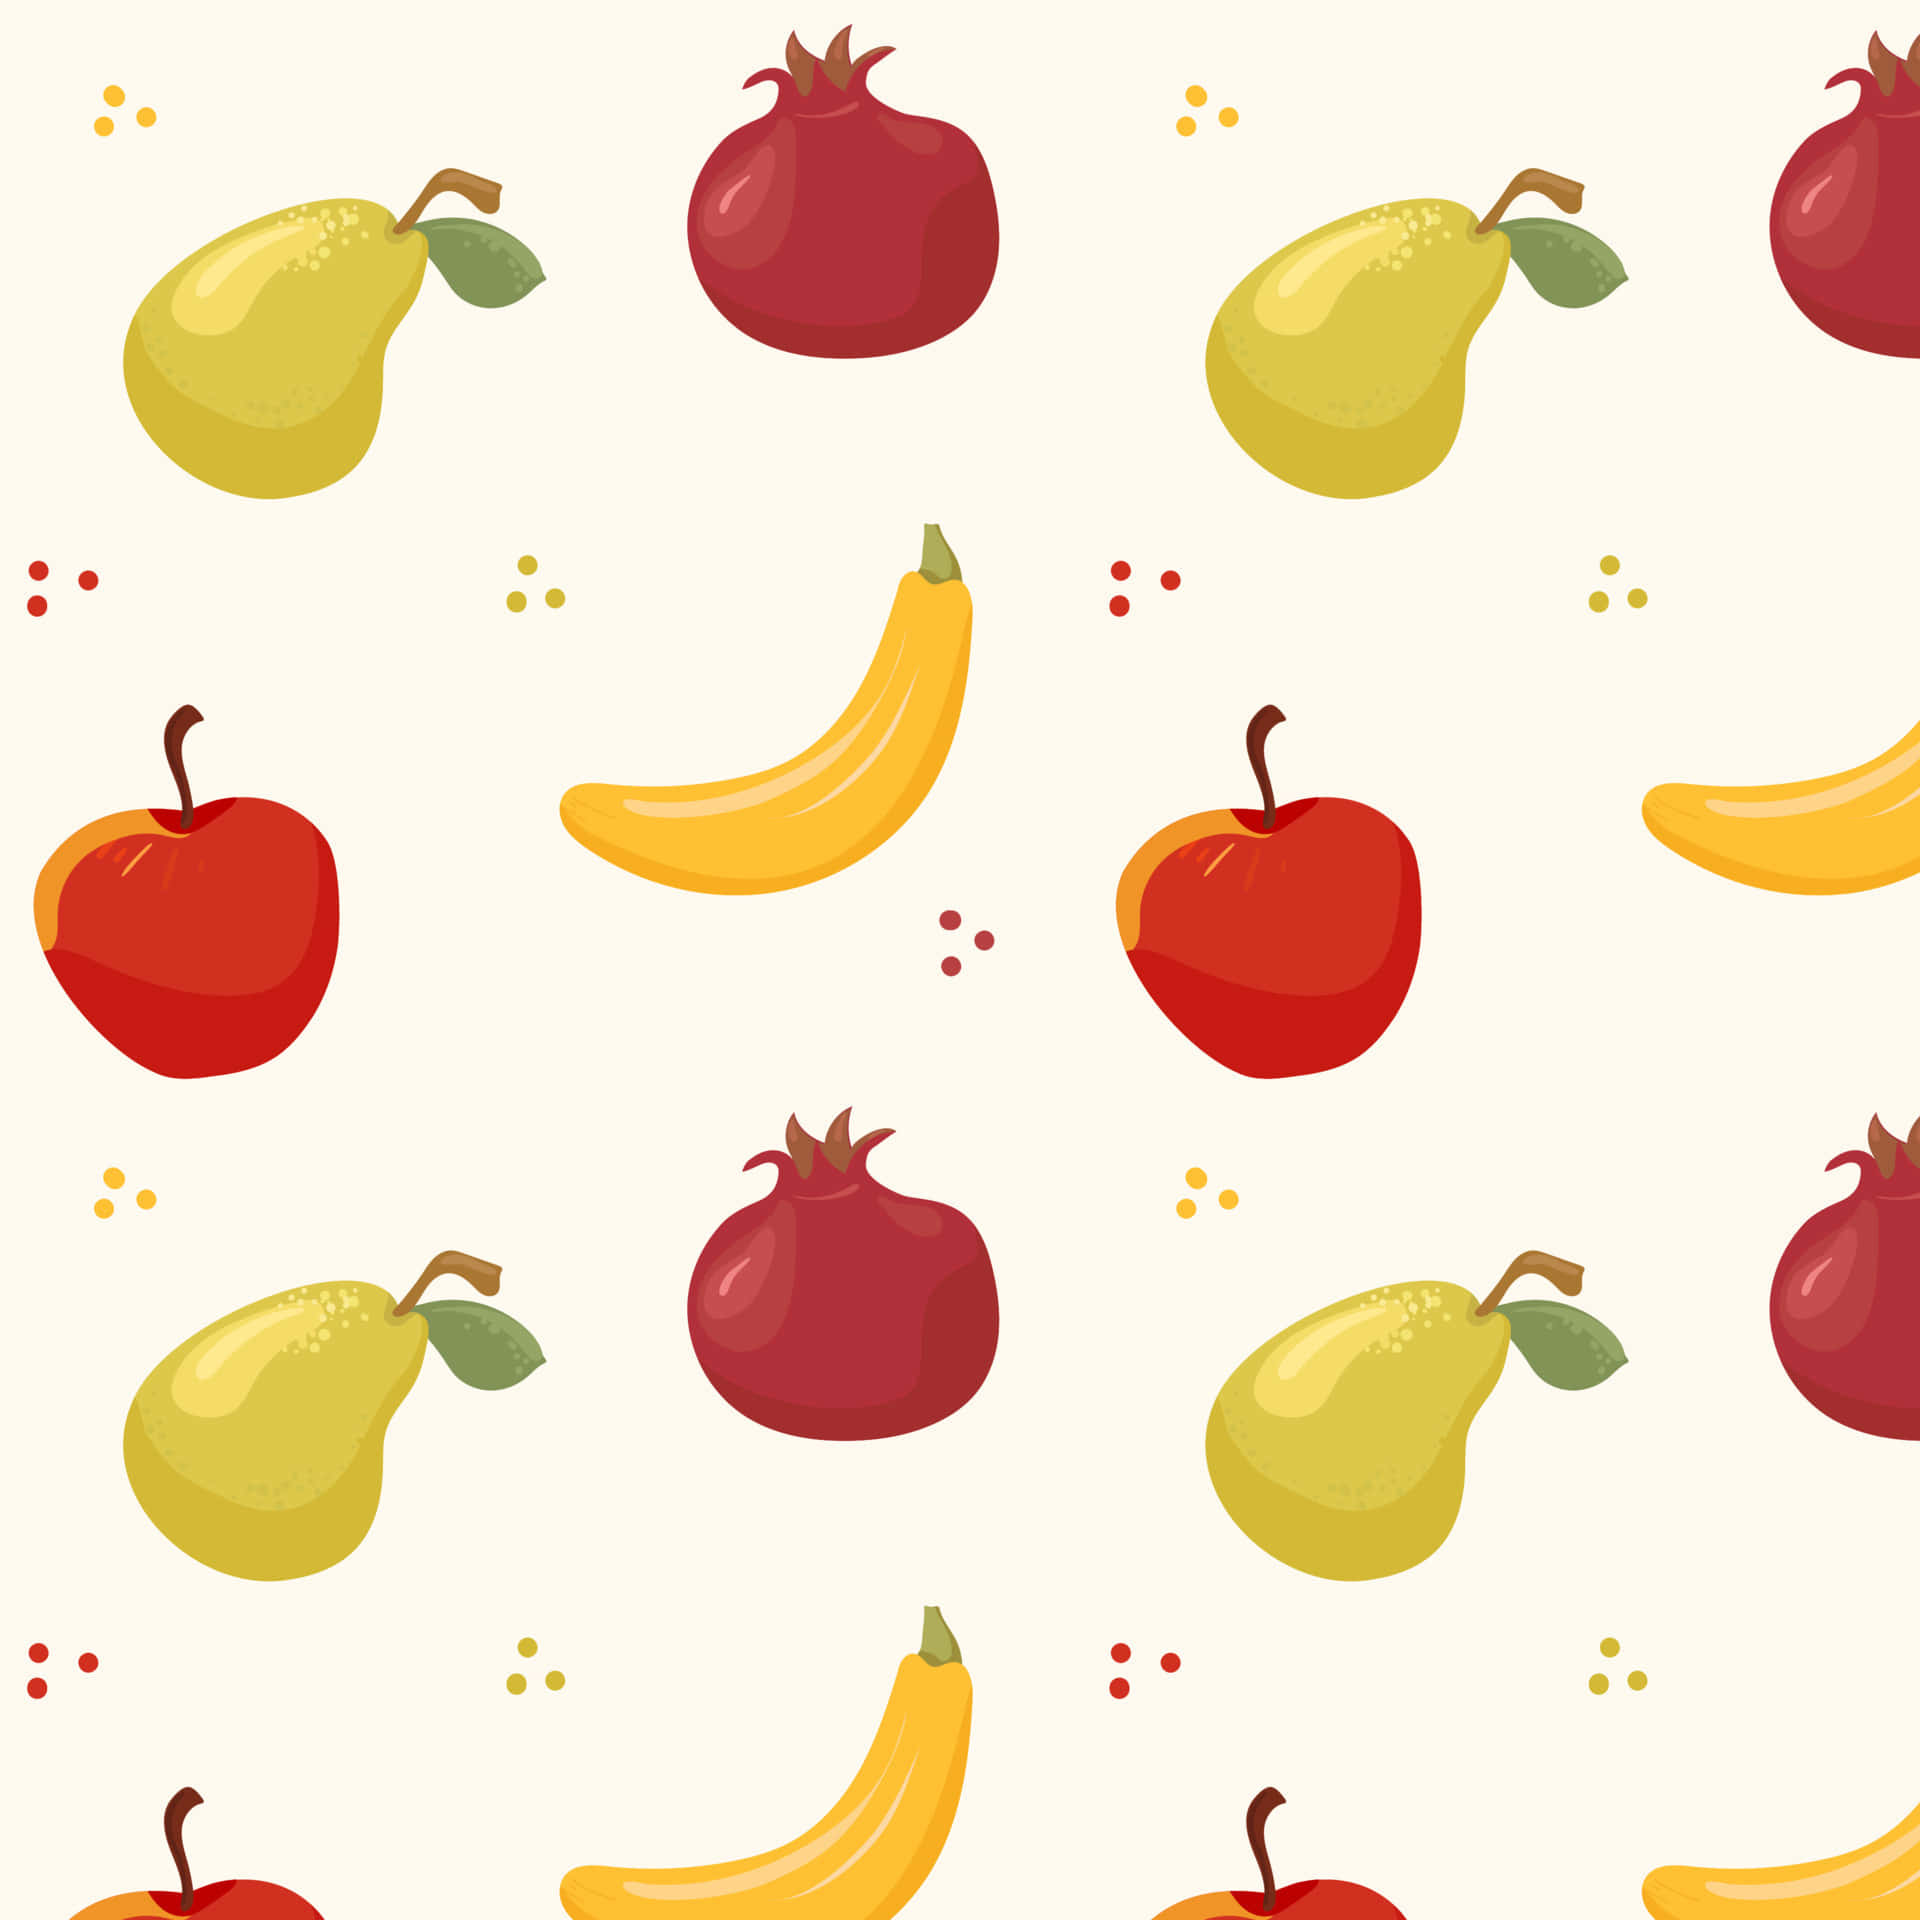 Fruits And Vegetables Digital Art Wallpaper